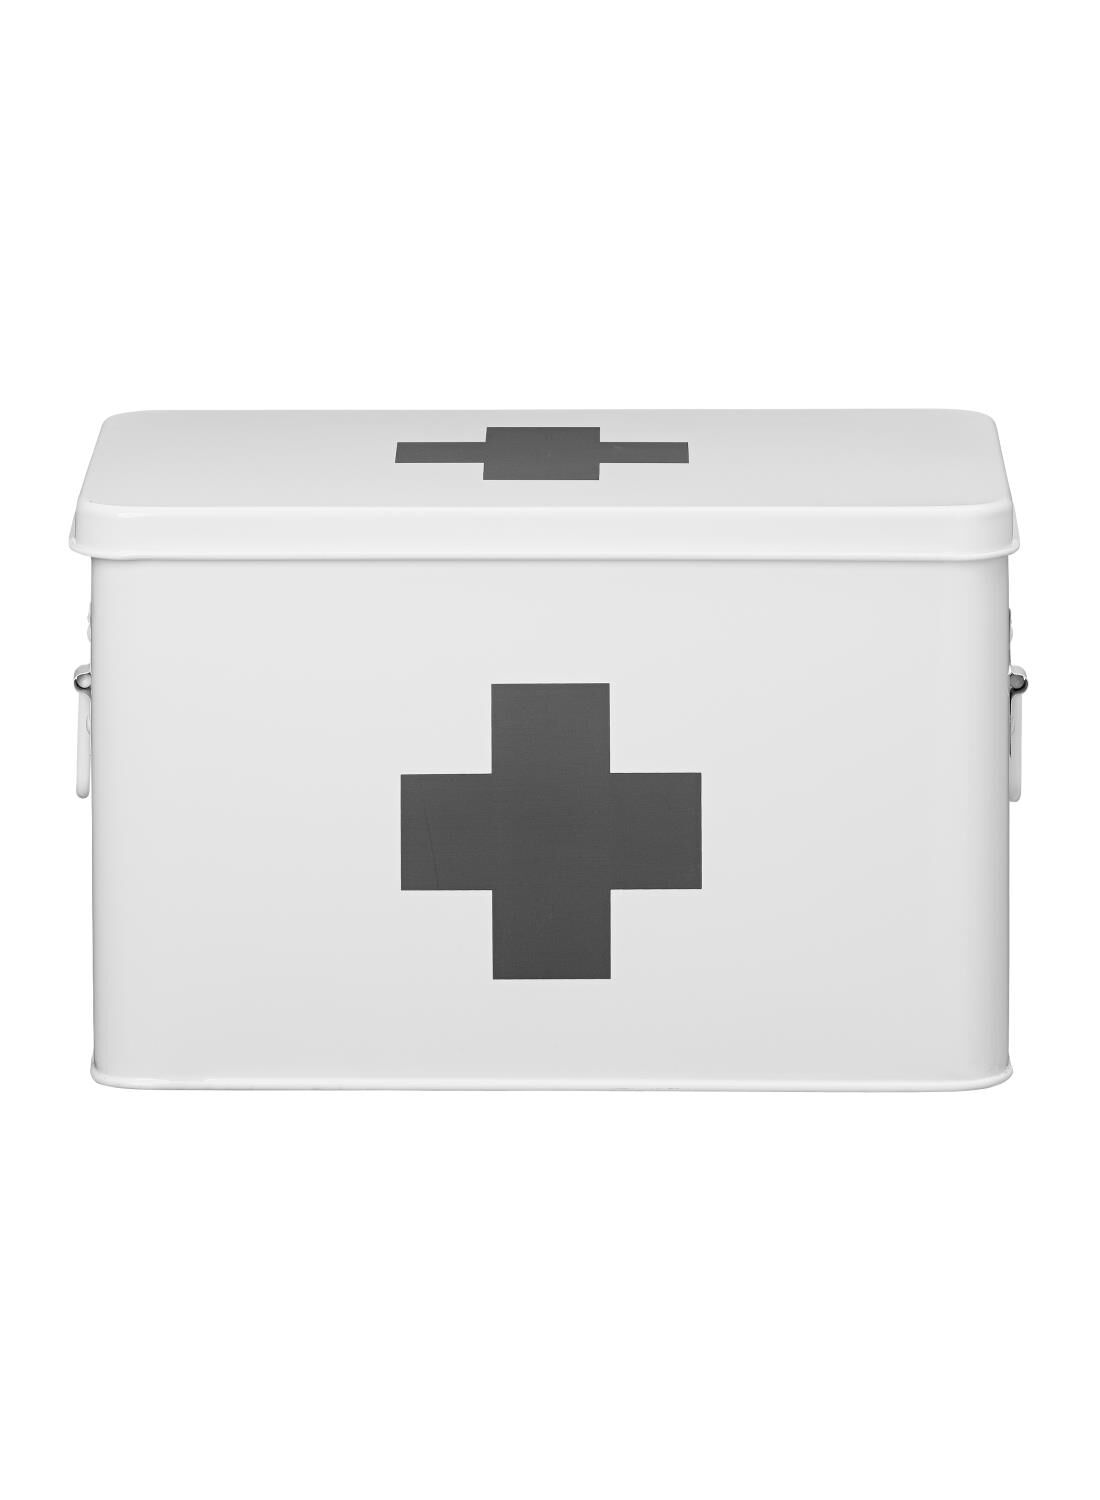 medicijnbox 32x20x19.5 wit - HEMA